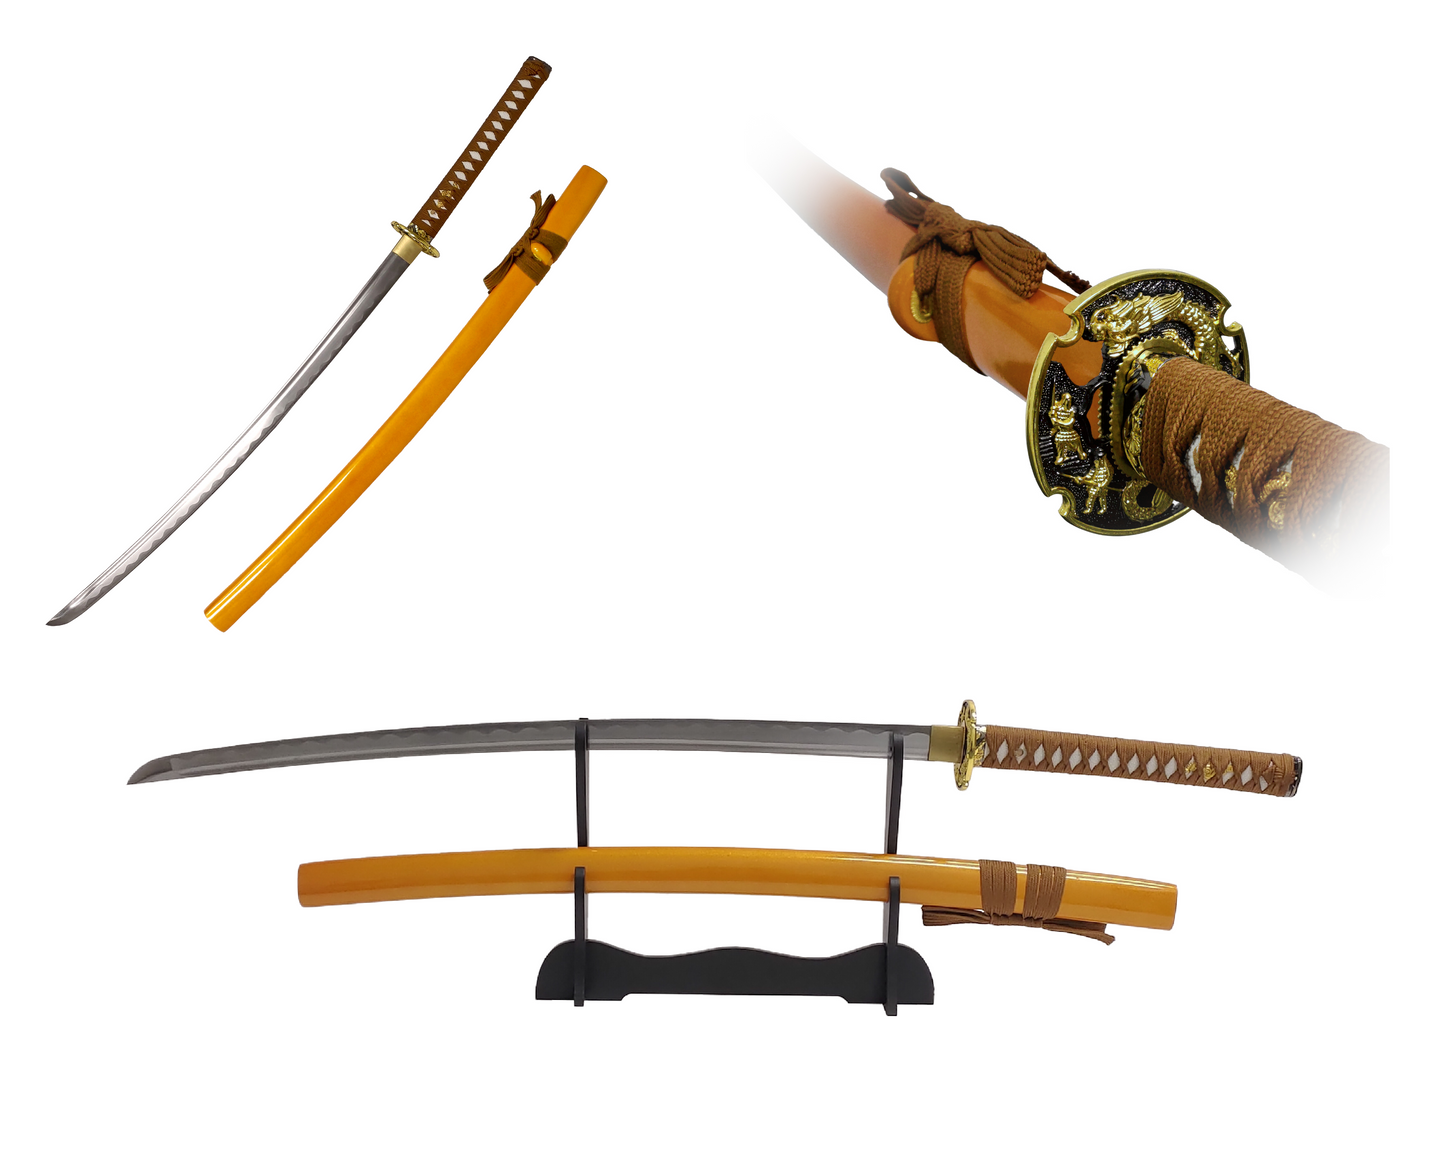 GOLD DRAGON KATANA FULL TANG JAPANESE CARBON STEEL SAMURAI SWORD